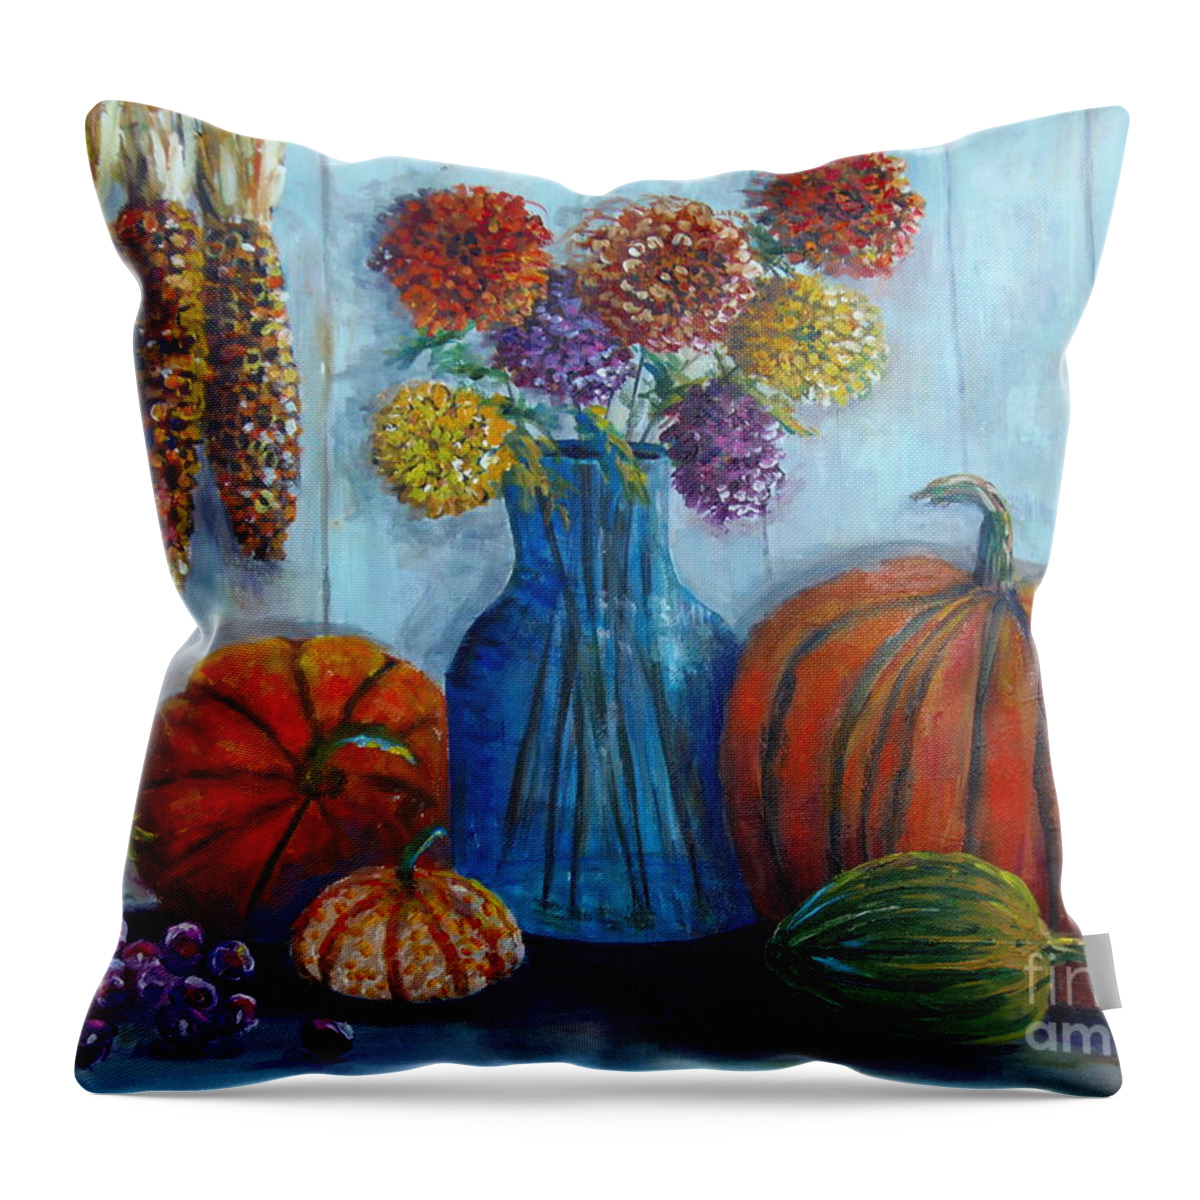 Fall Still Life Throw Pillow featuring the painting Autumn Still Life by Lou Ann Bagnall